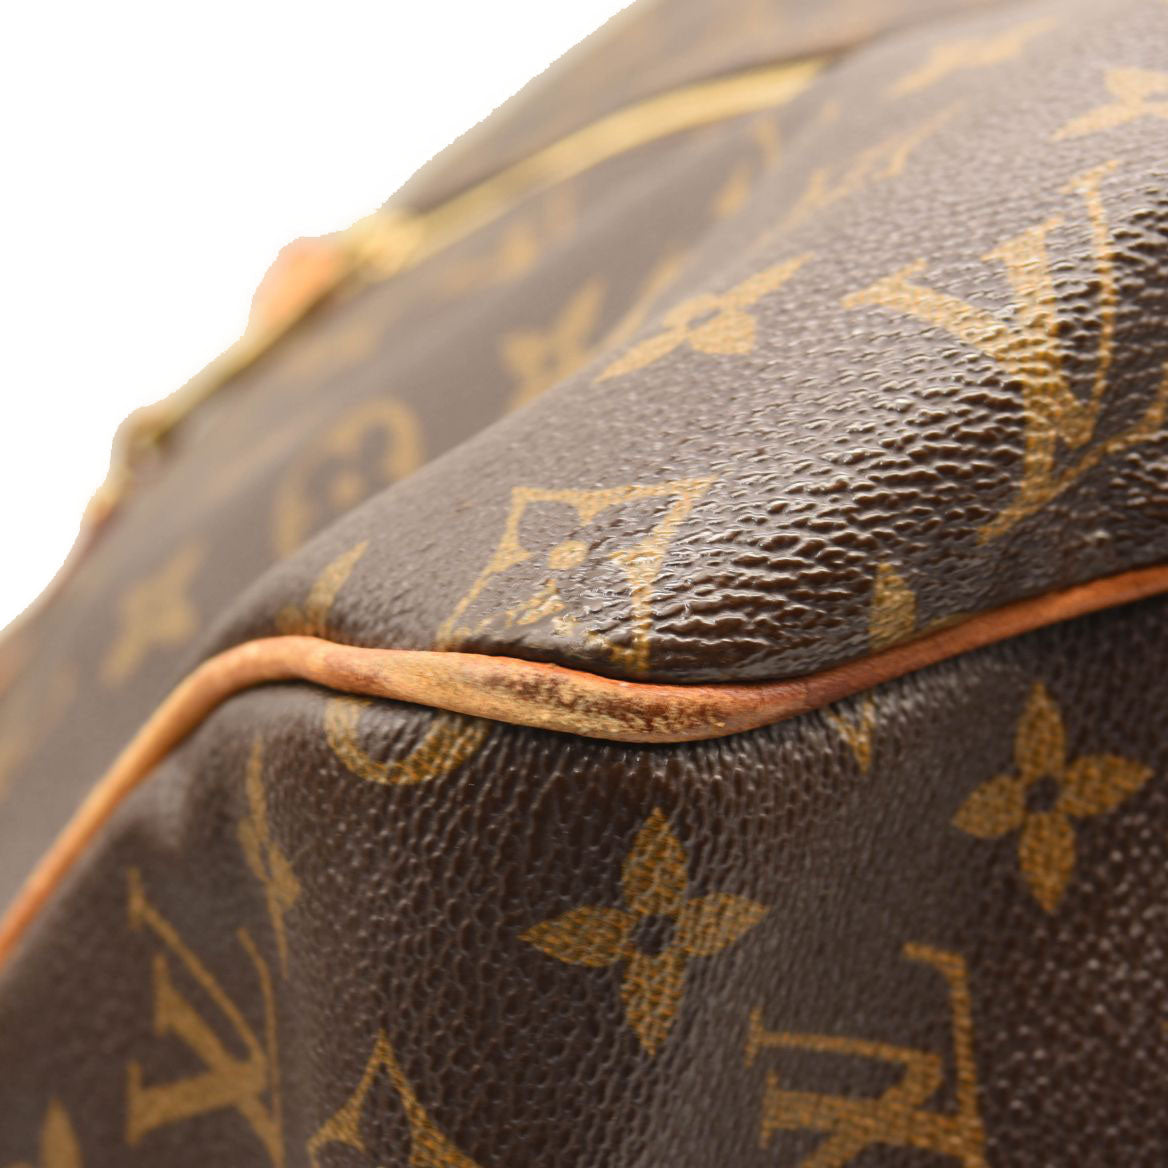 Vuitton Delightful GM  Louis vuitton handbags neverfull, Louis